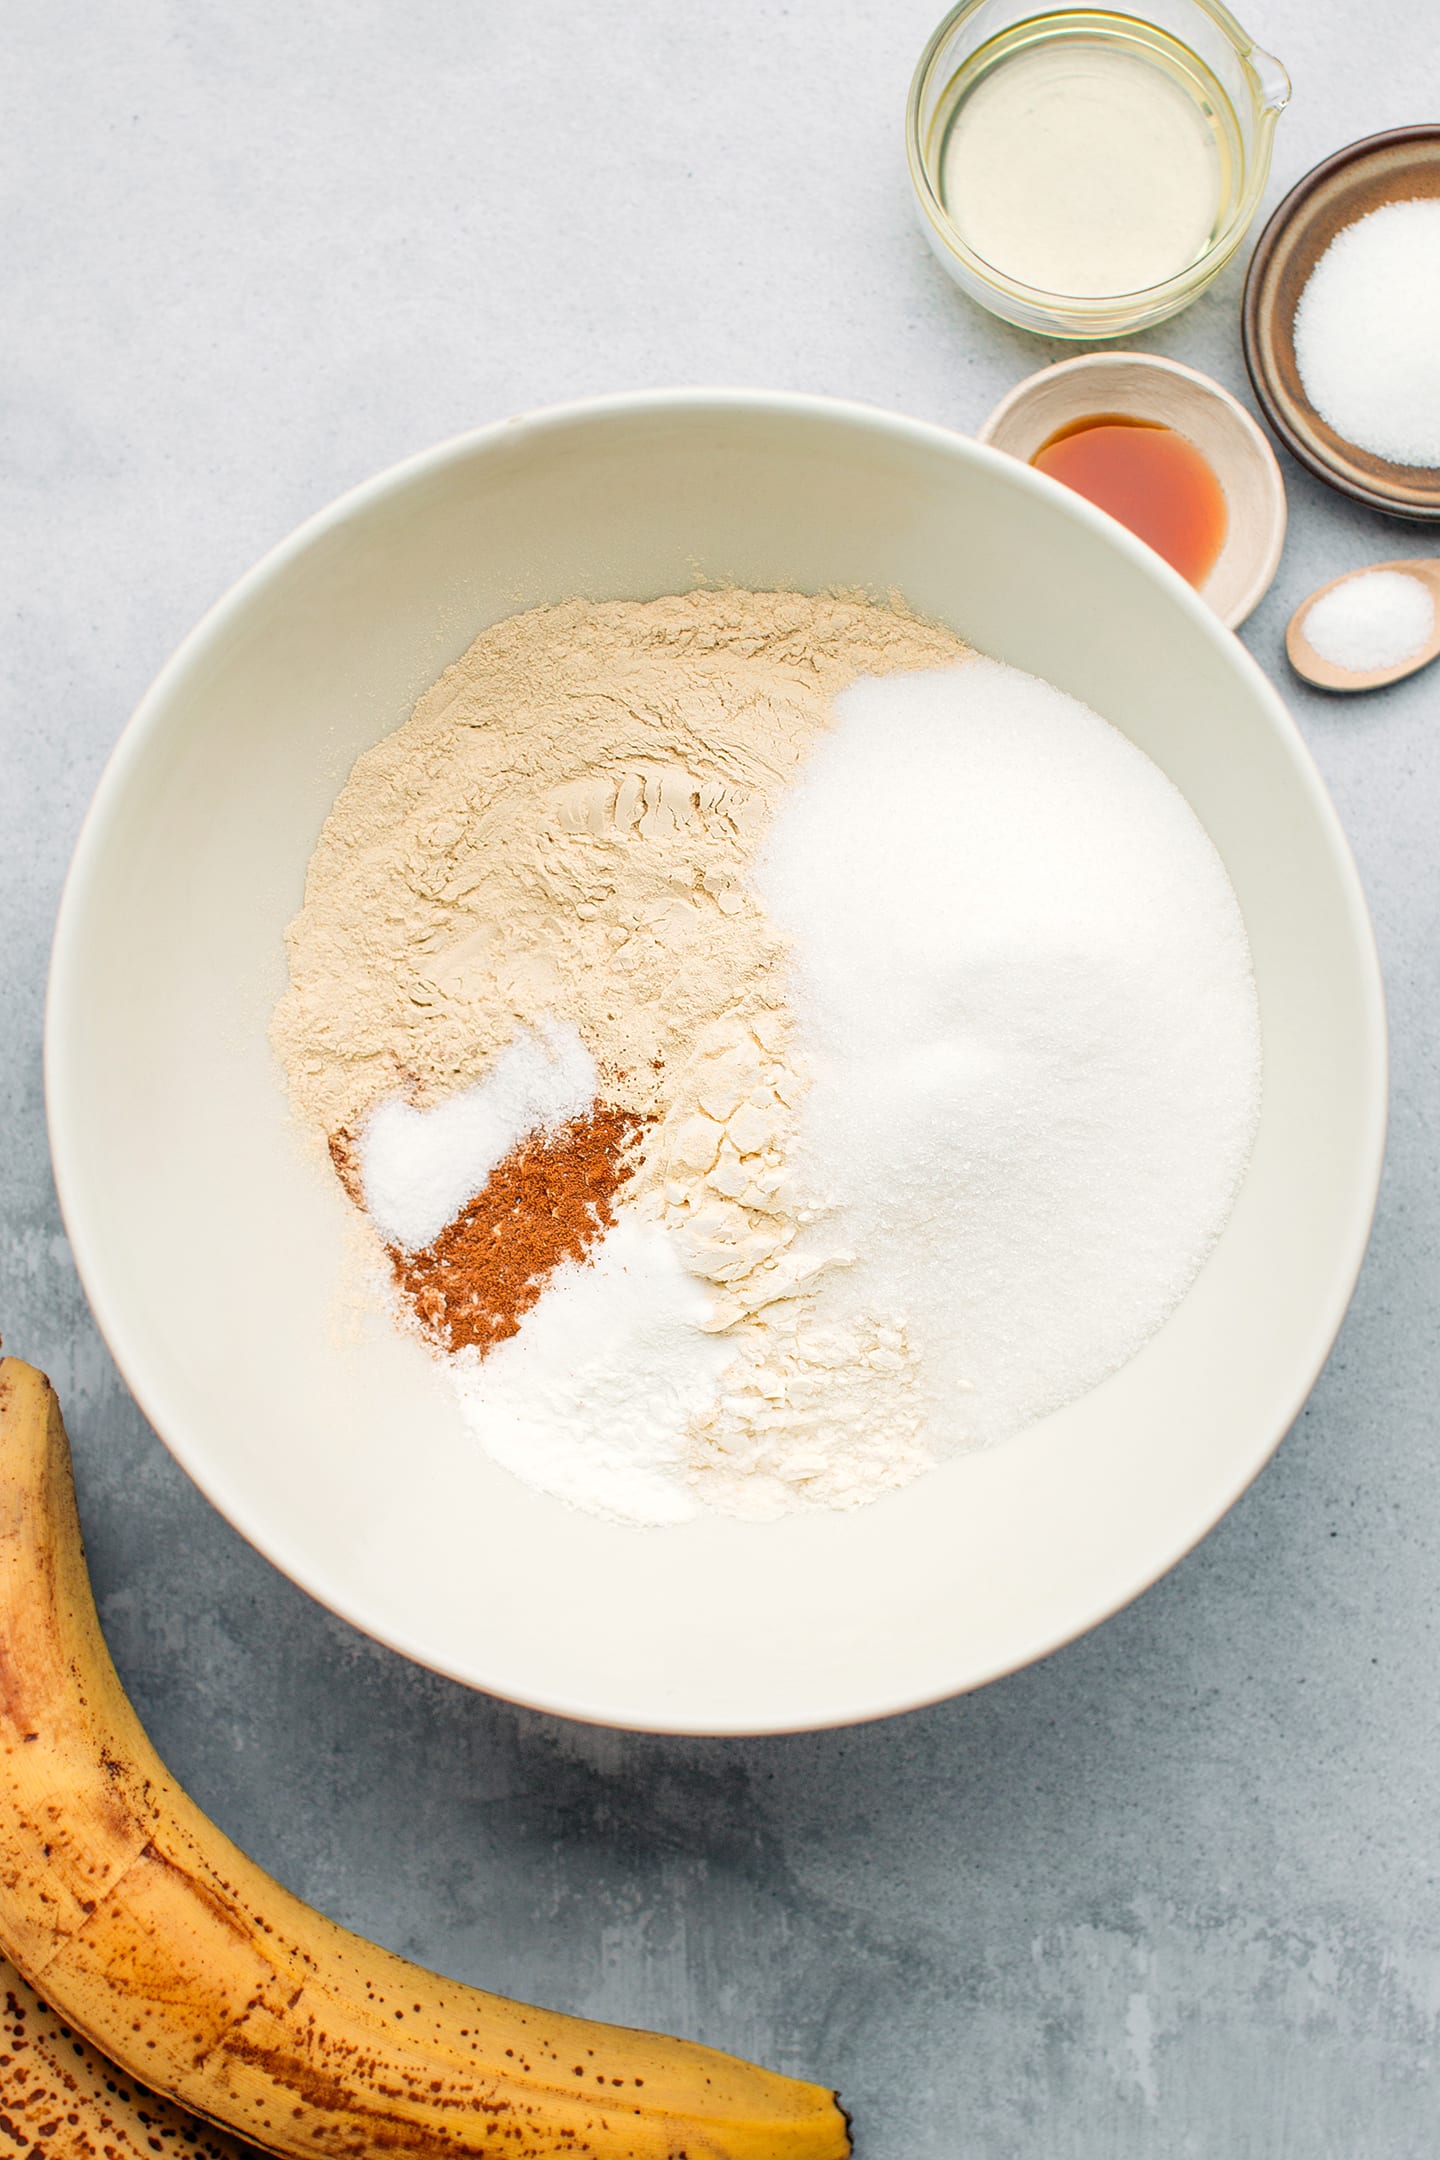 Flour, protein powder, sugar, and cinnamon in a bowl.